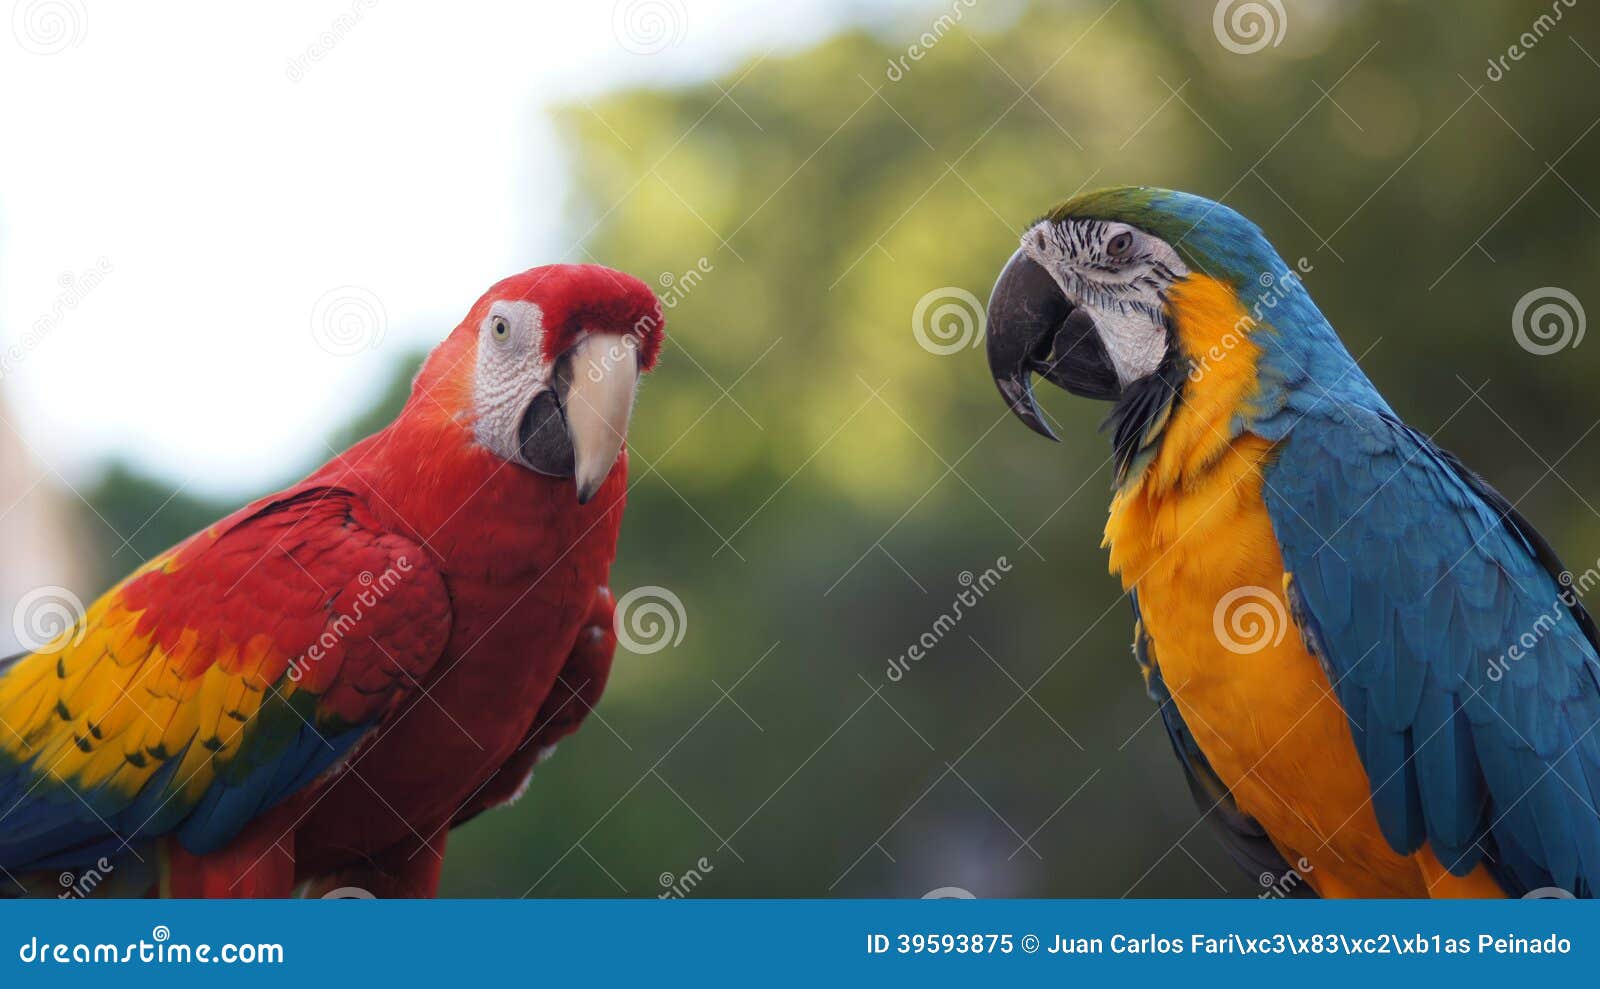 tropical parrot, carib caribbean tropical.